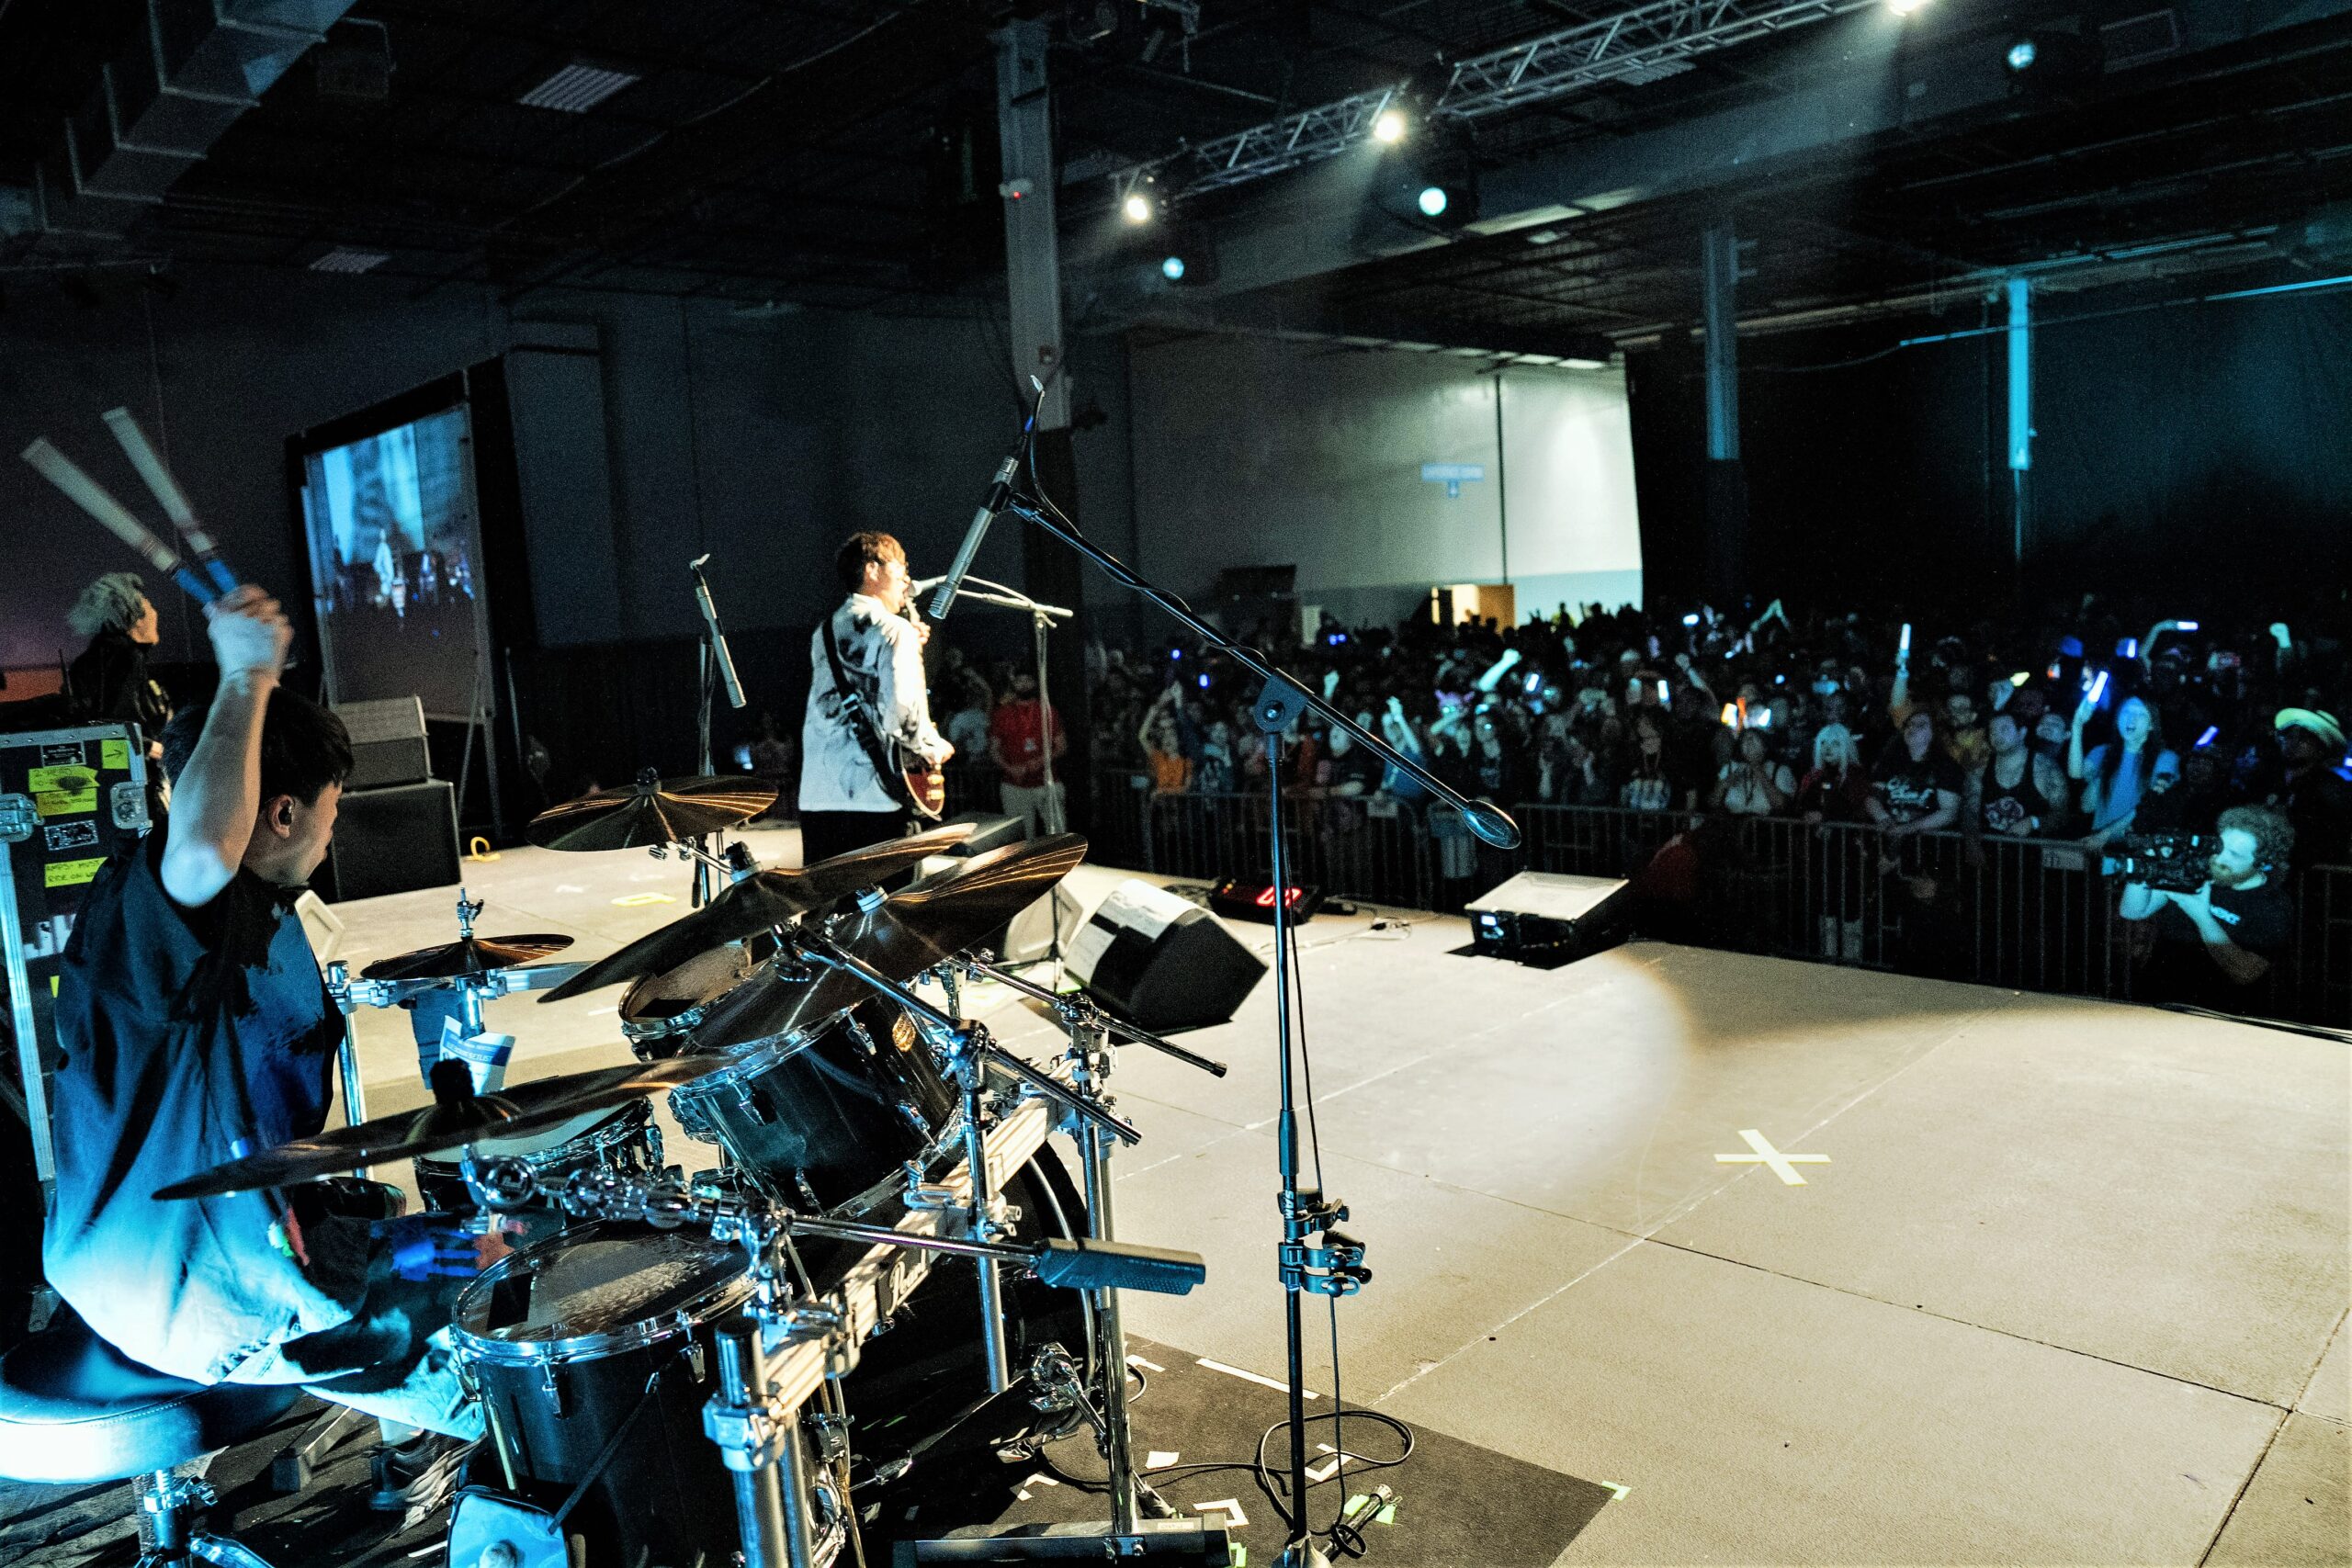 J-Rock band Blue Encount. Photo provided courtesy of Sony Music Entertainment Japan (SMEJ)